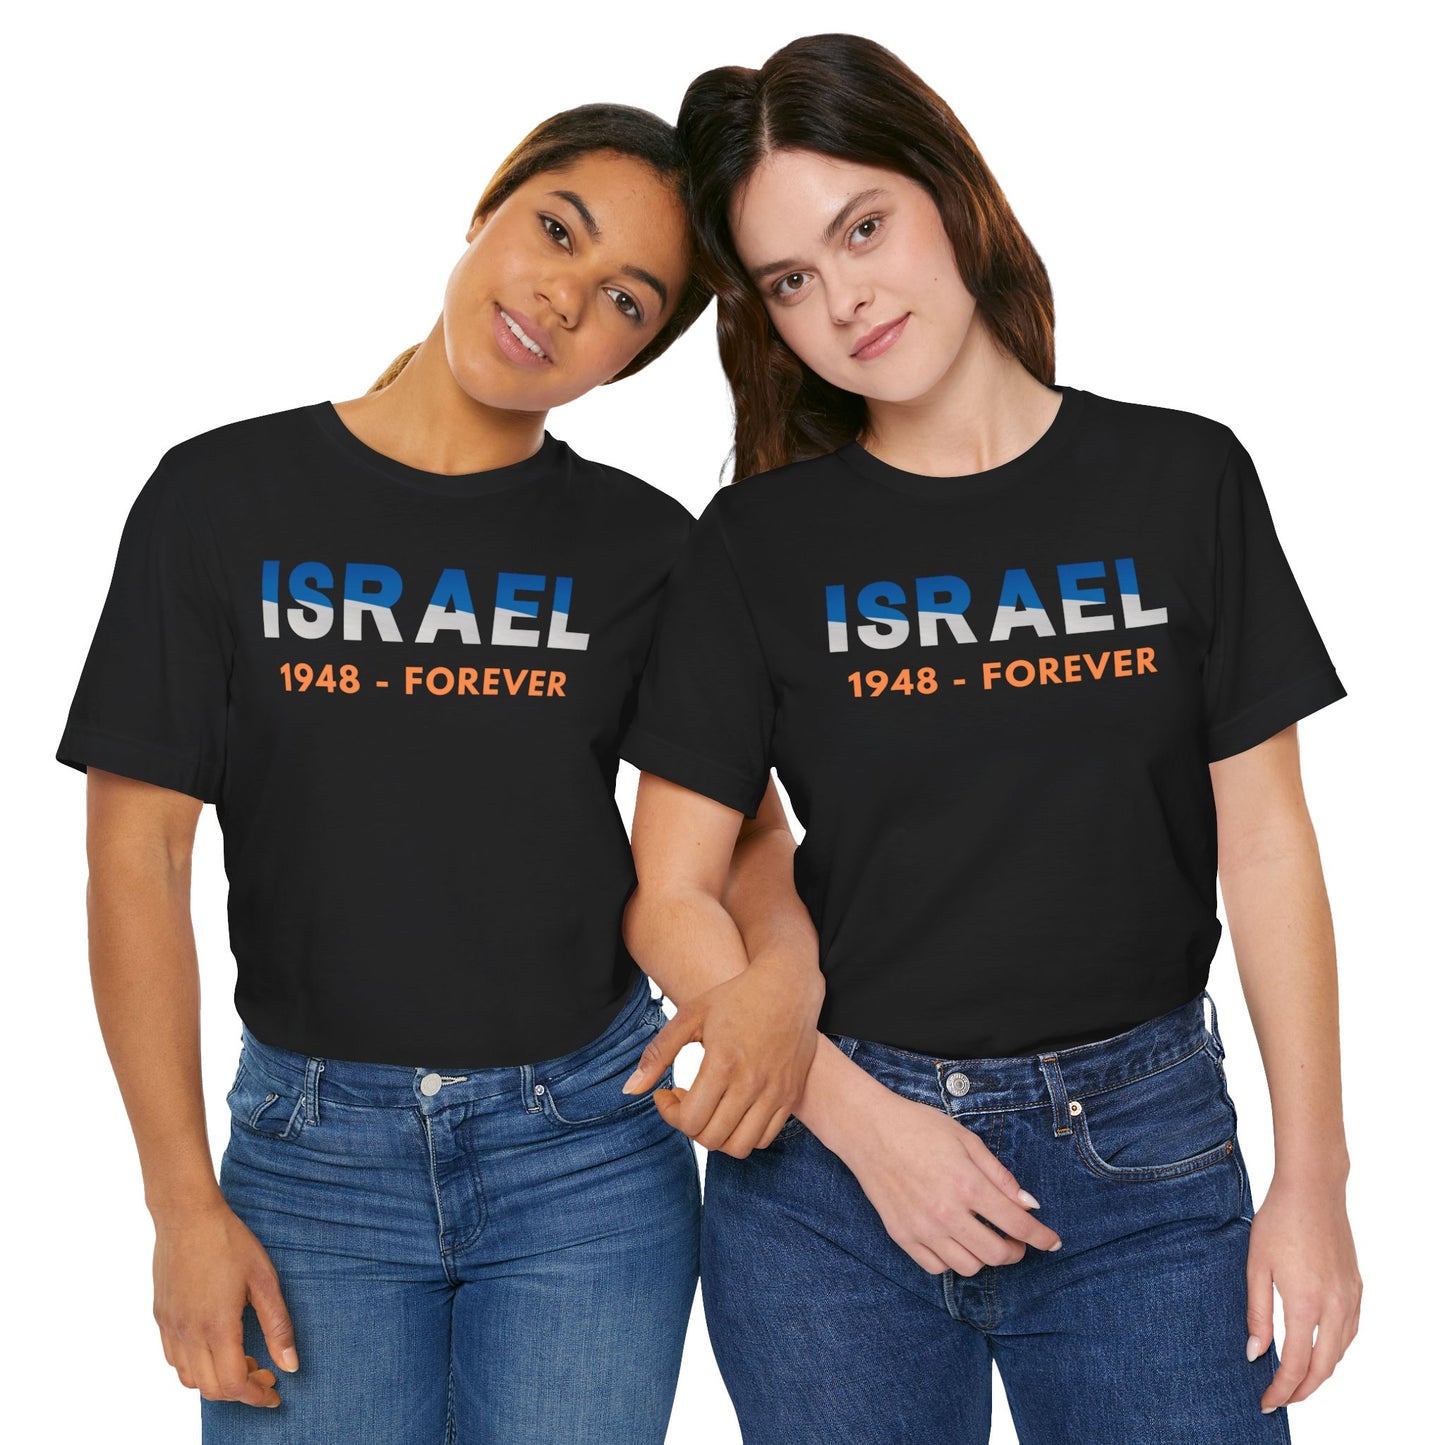 Israel, 1948 - Forever Unisex Short Sleeve Tee